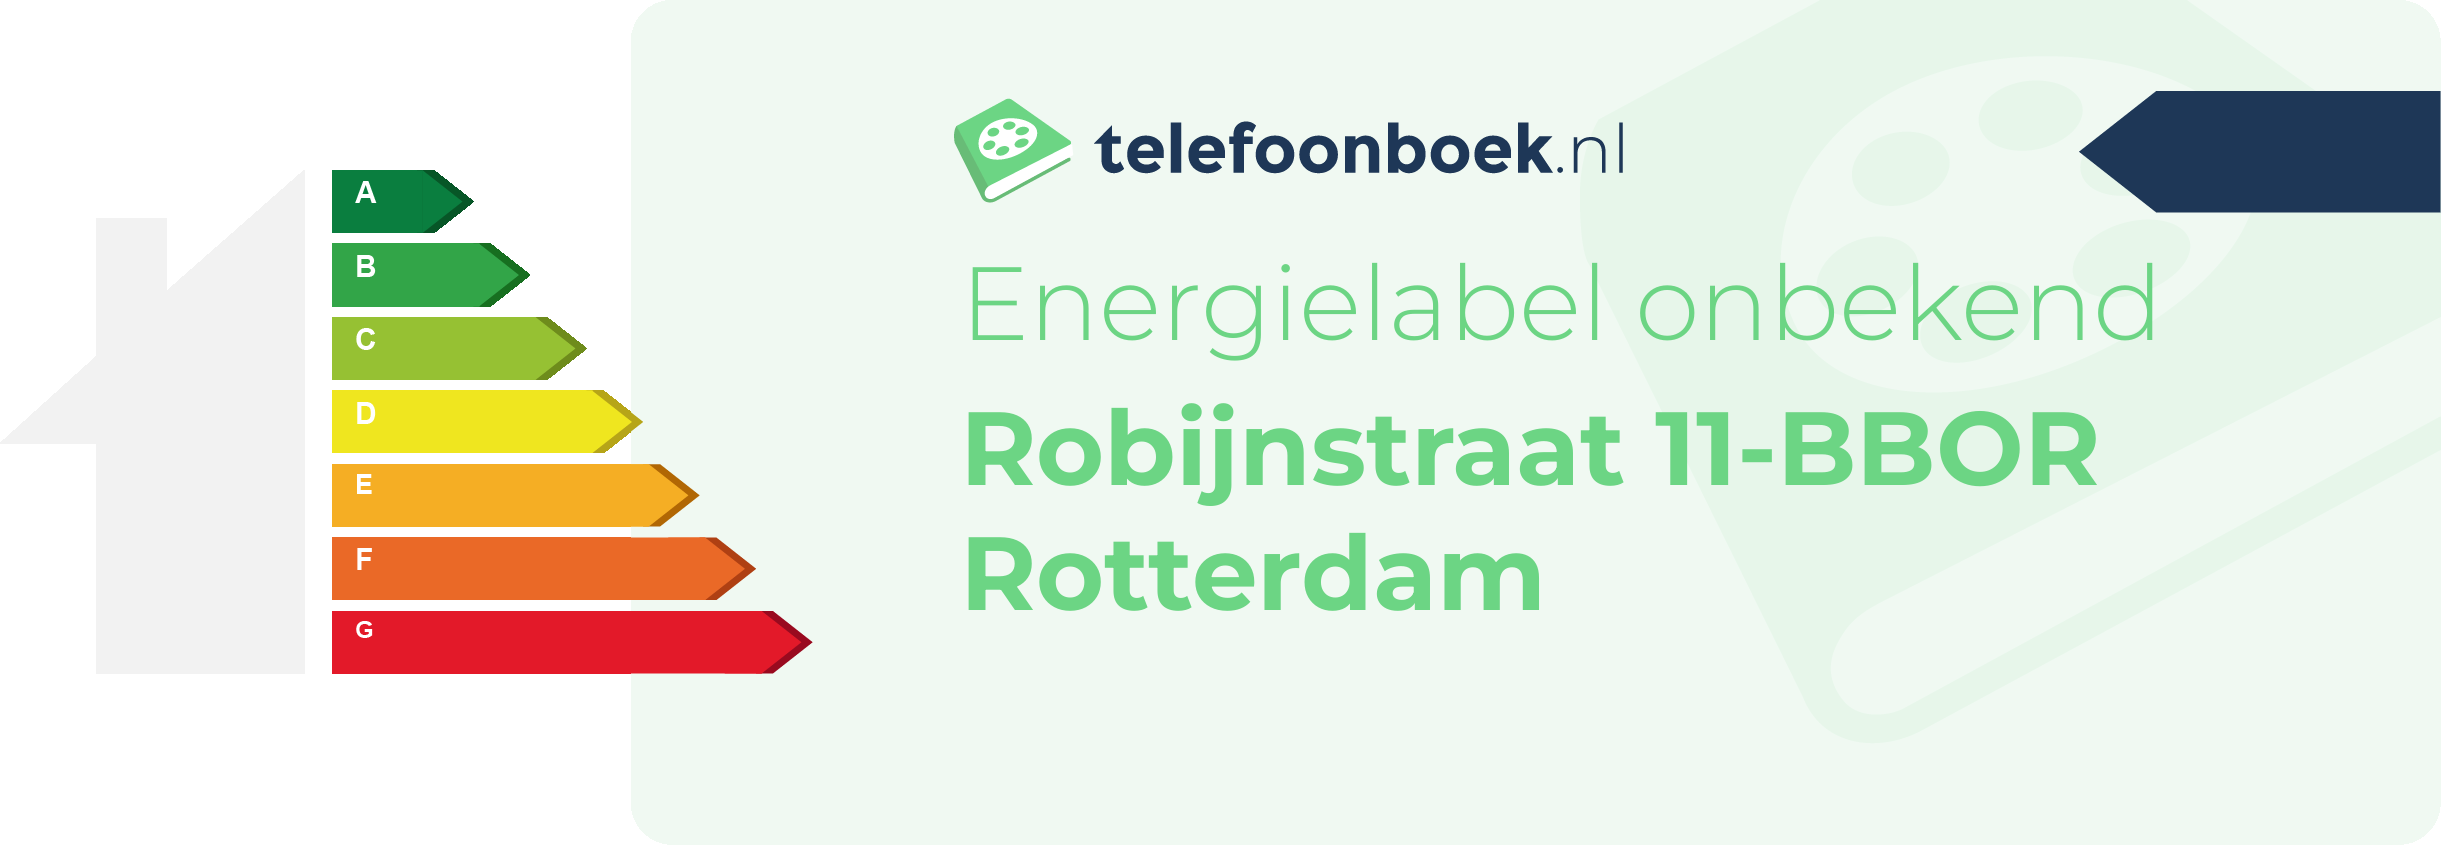 Energielabel Robijnstraat 11-BBOR Rotterdam